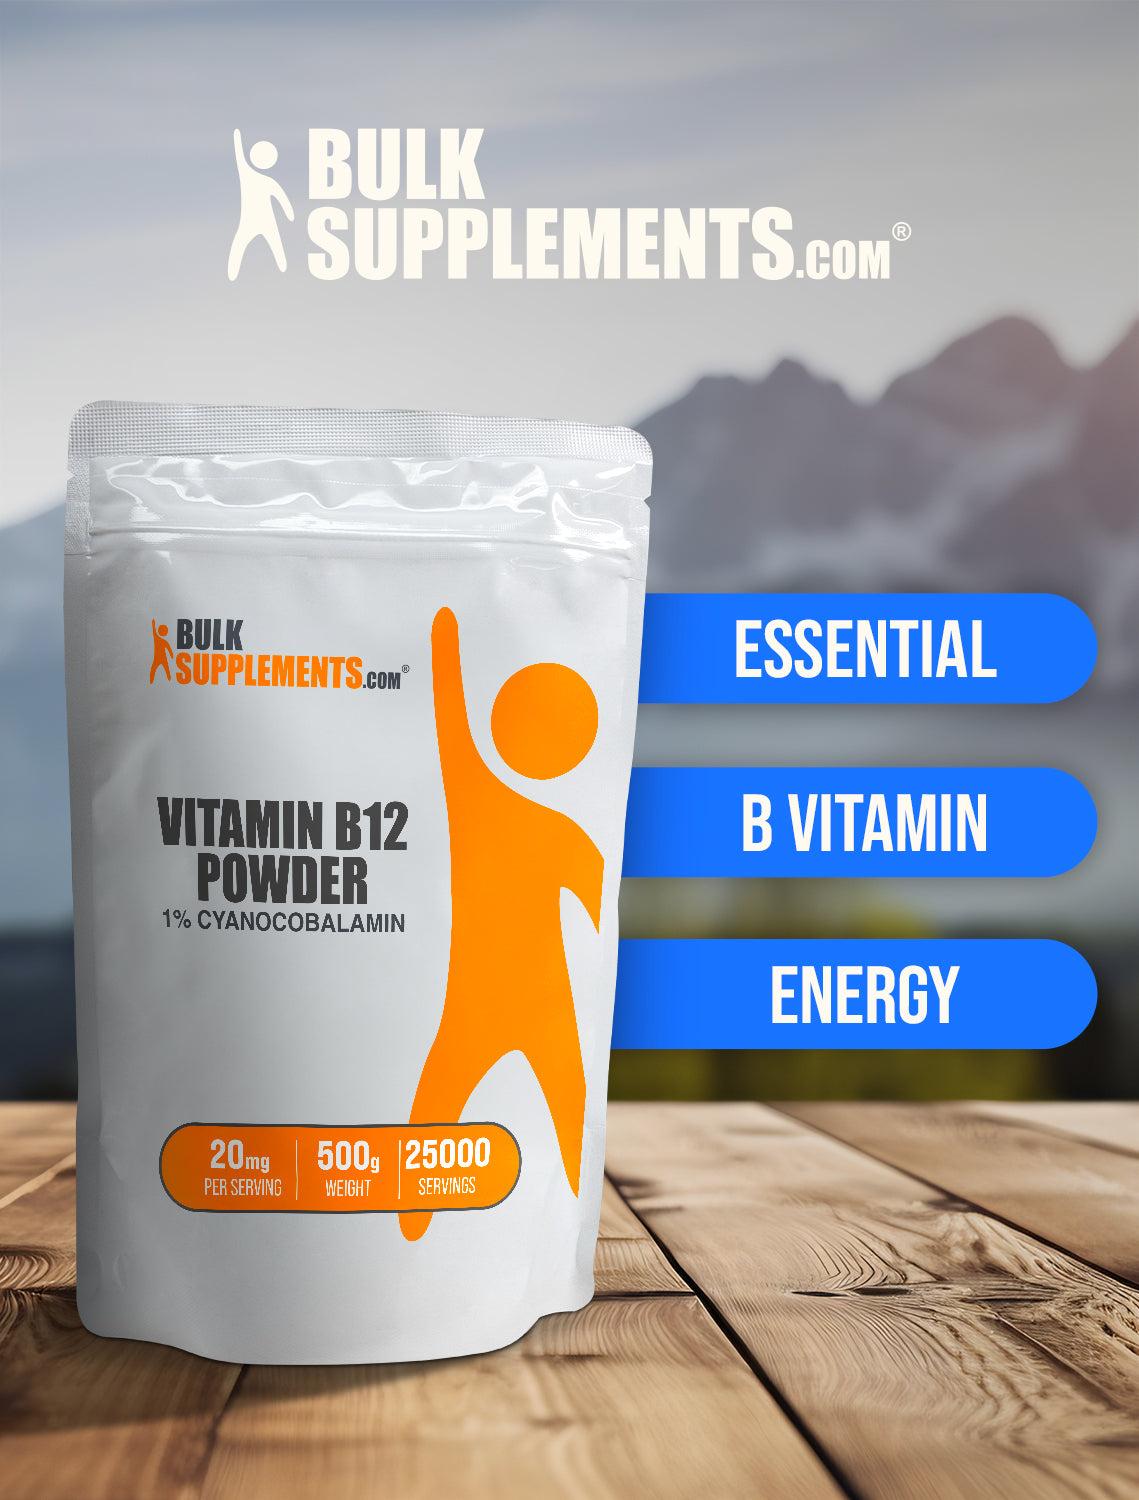 Vitamin B12 1% Cyanocobalamin powder keyword image 500g